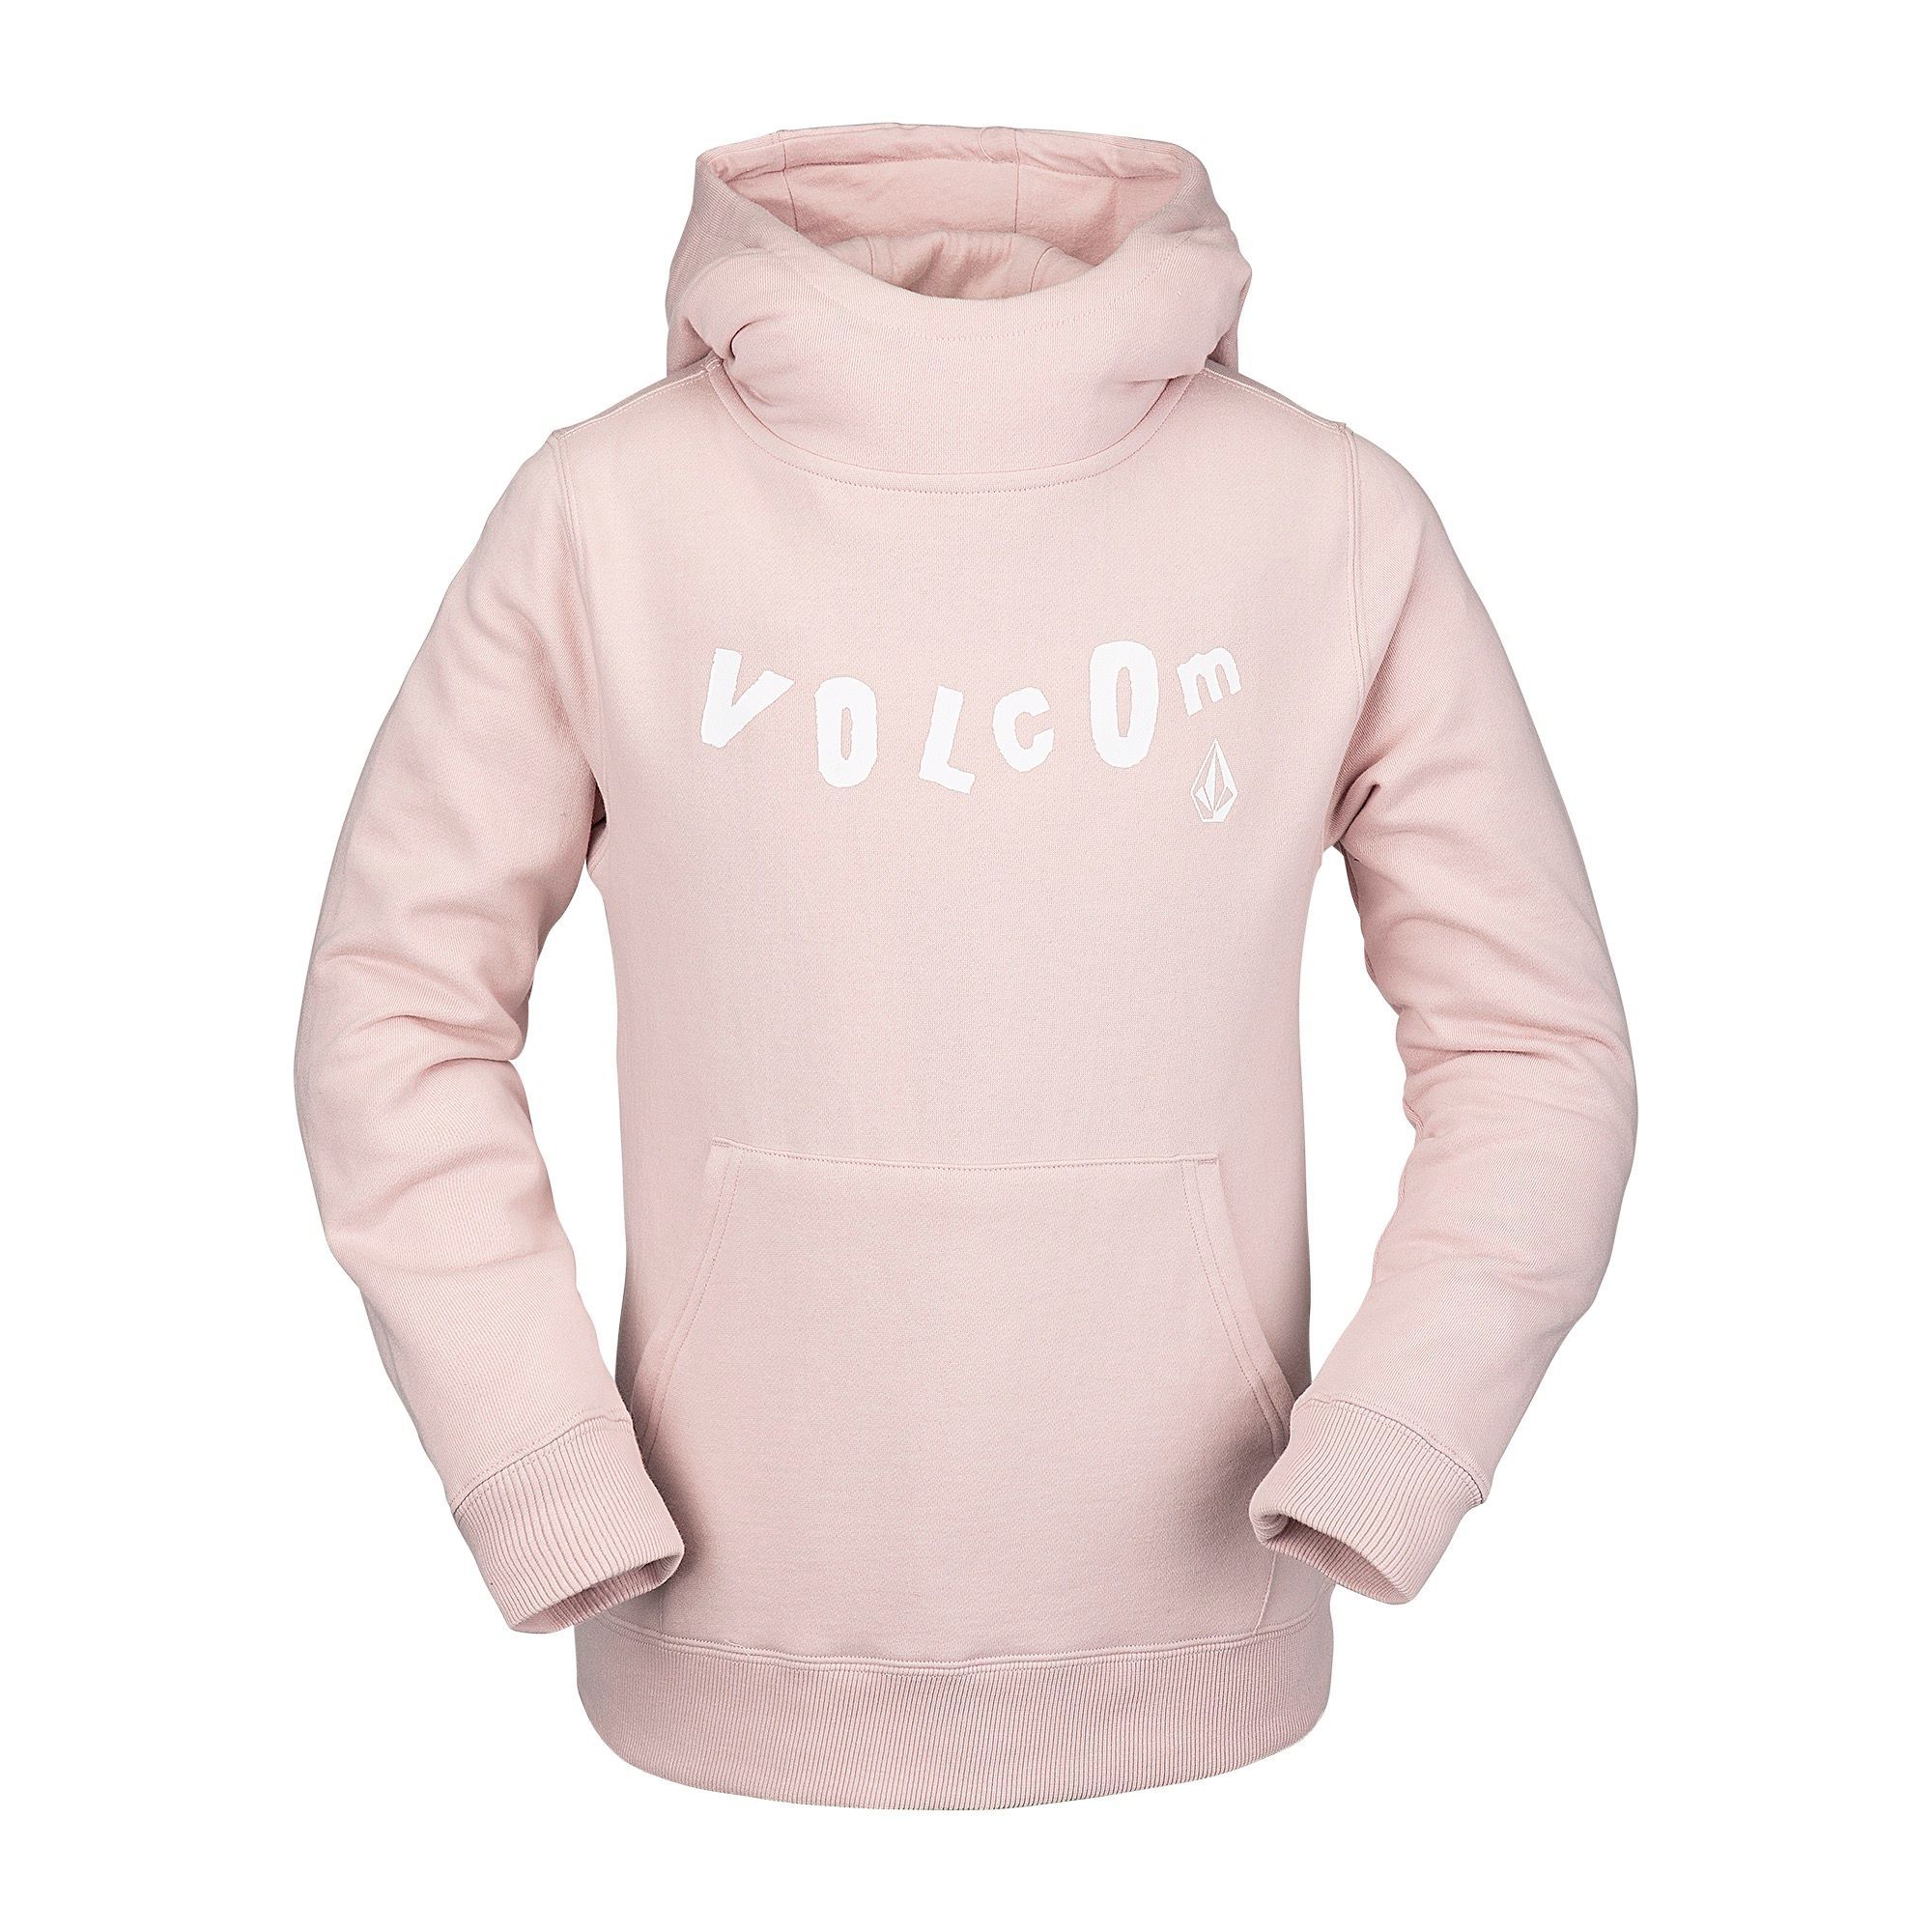 VOLCOM Hotlapper Pullover Hoodie Girls Faded Pink KIDS APPAREL - Girl's Hoodies Volcom 